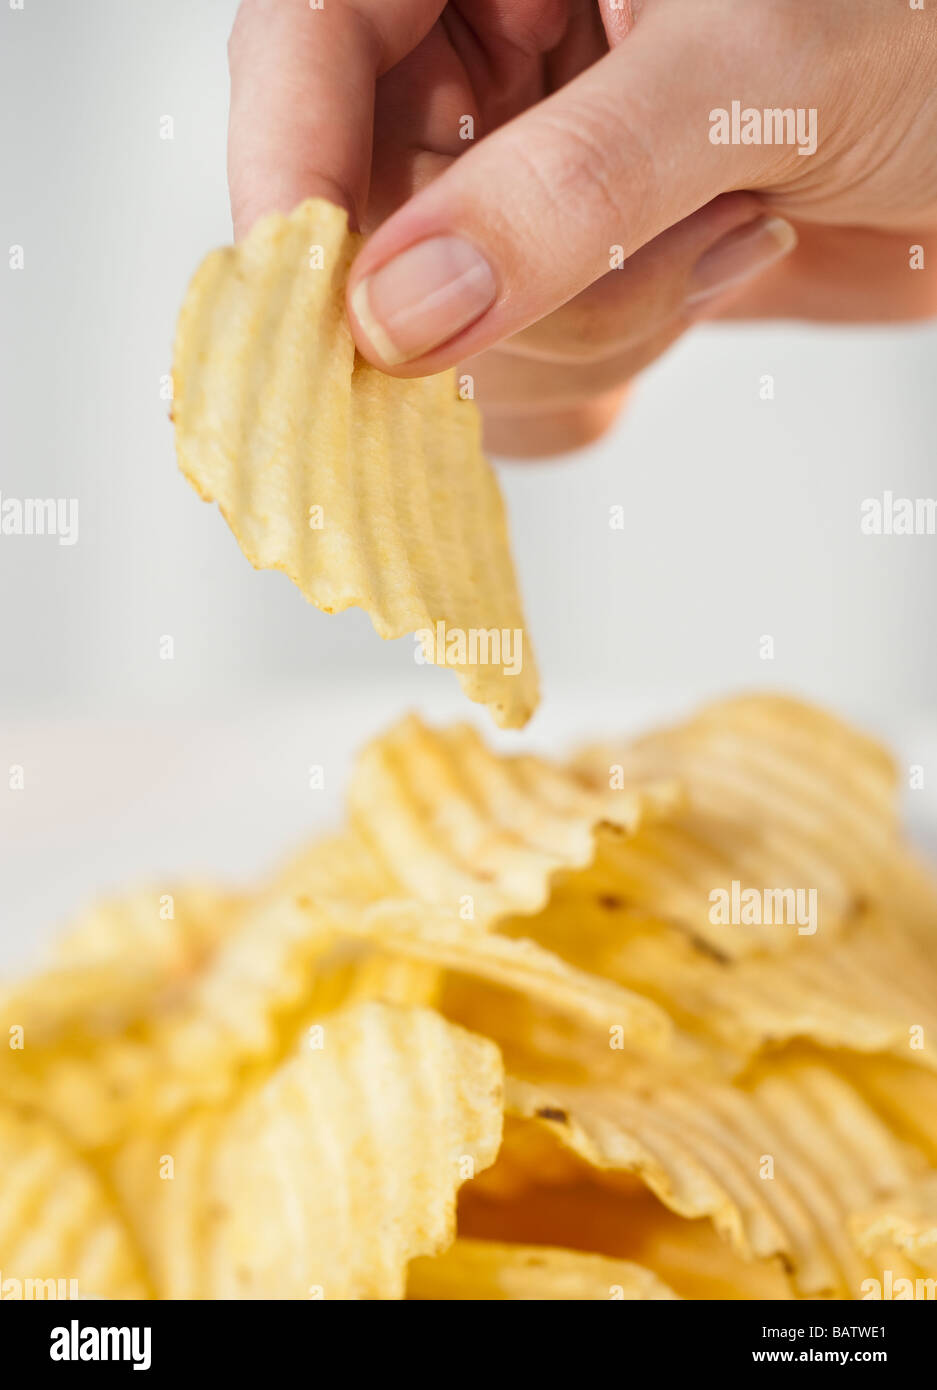 Woman's hand taking potato chip Banque D'Images